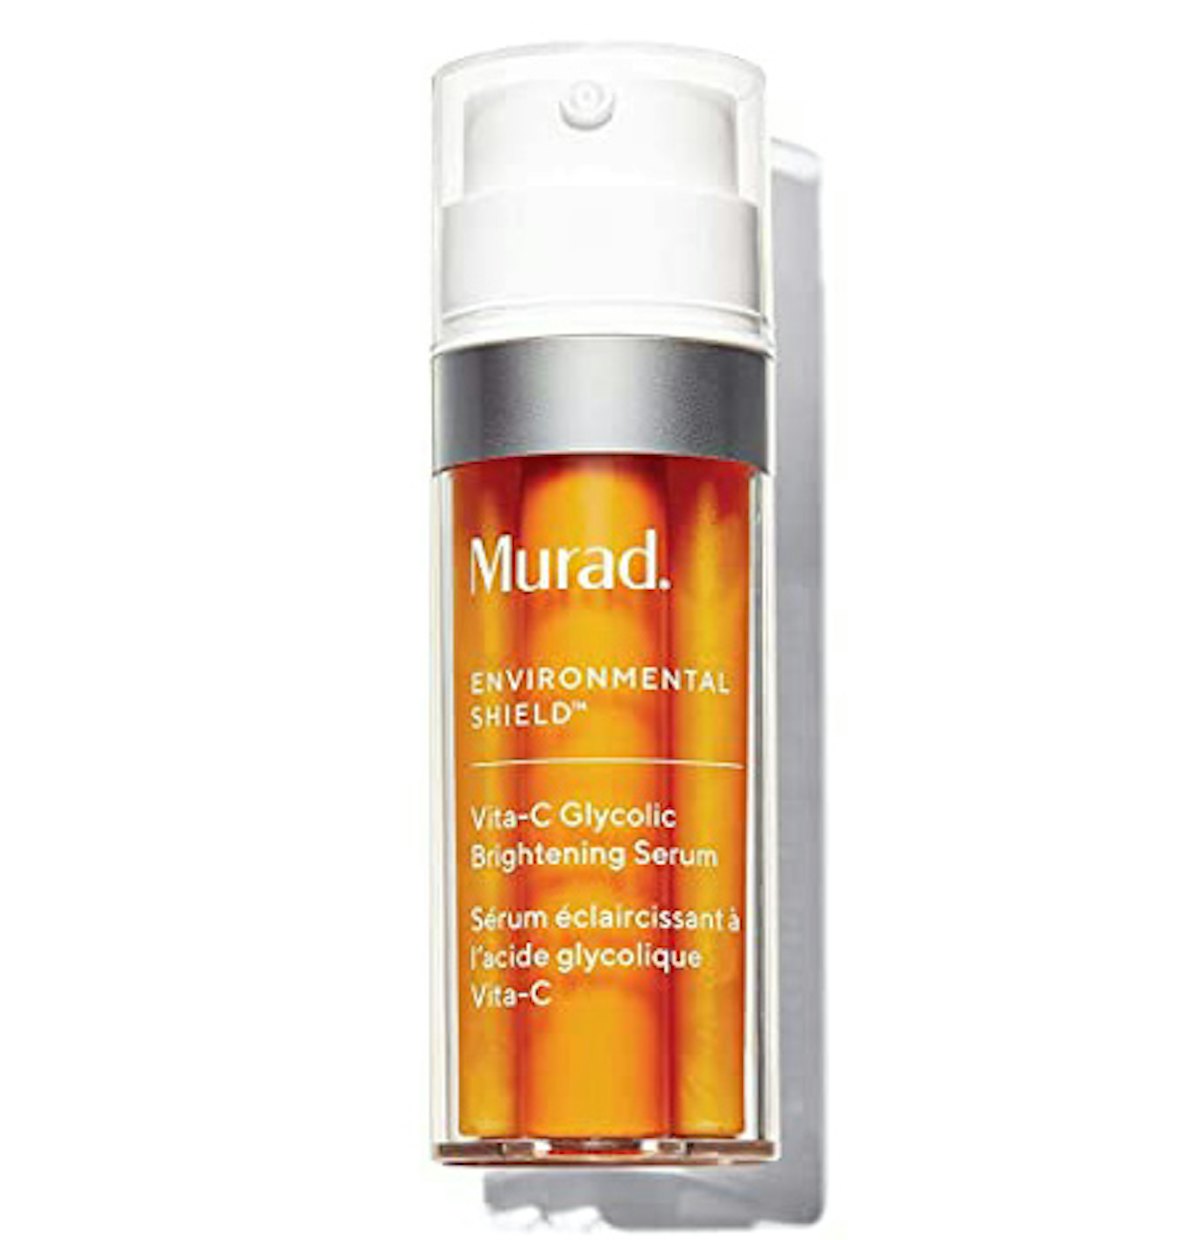 Murad Environmental Shield Vita-C Glycolic Brightening Serum 